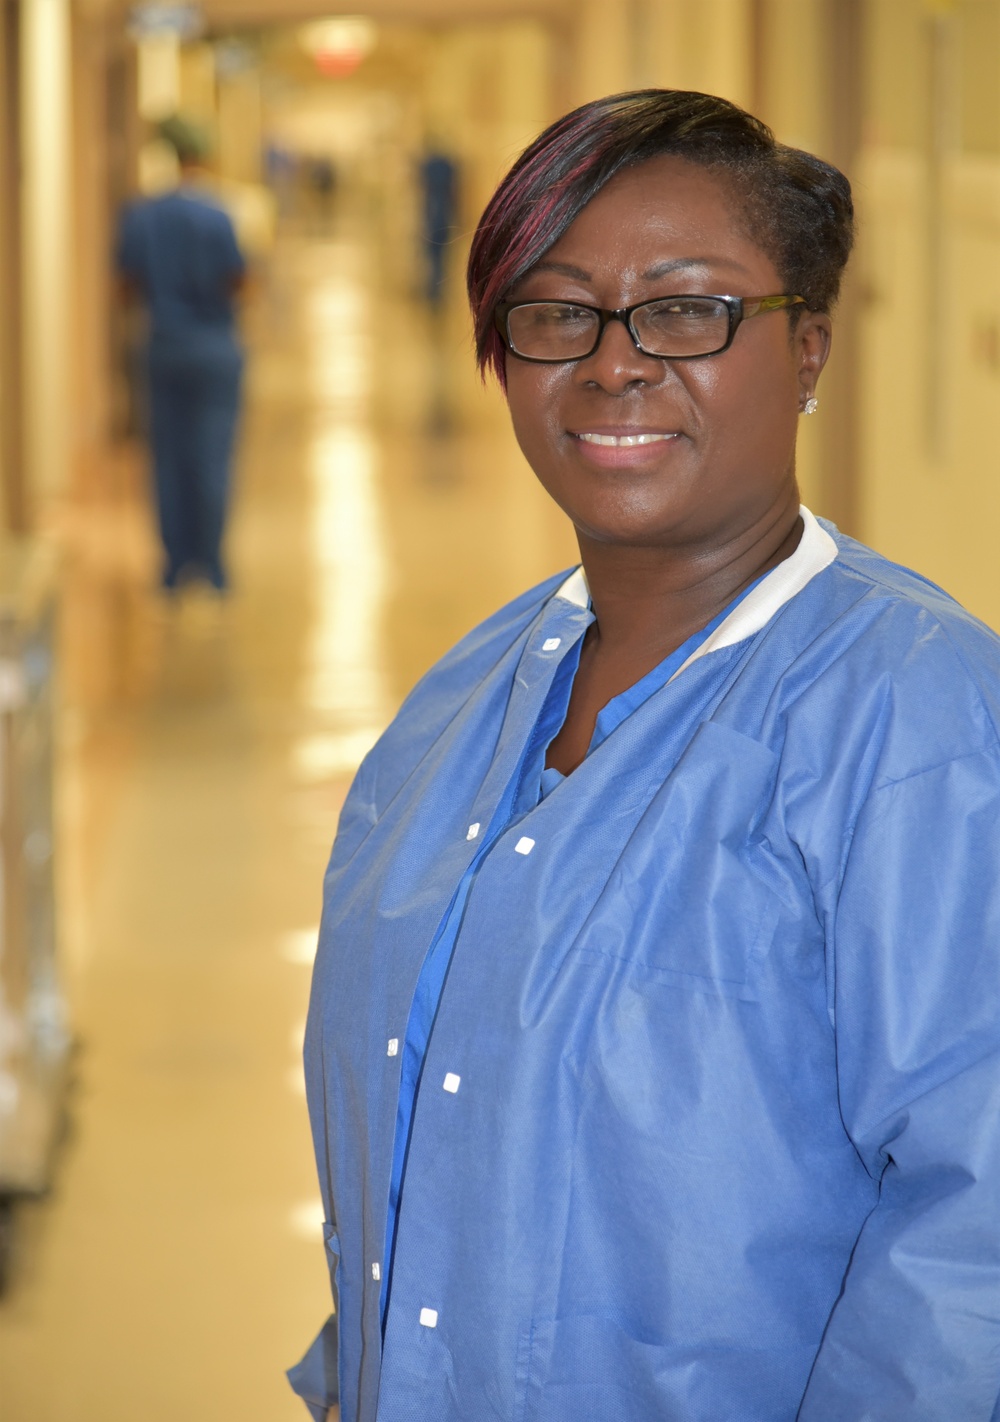 Surgical nurse at WRB poses during National Nurses Week 2019